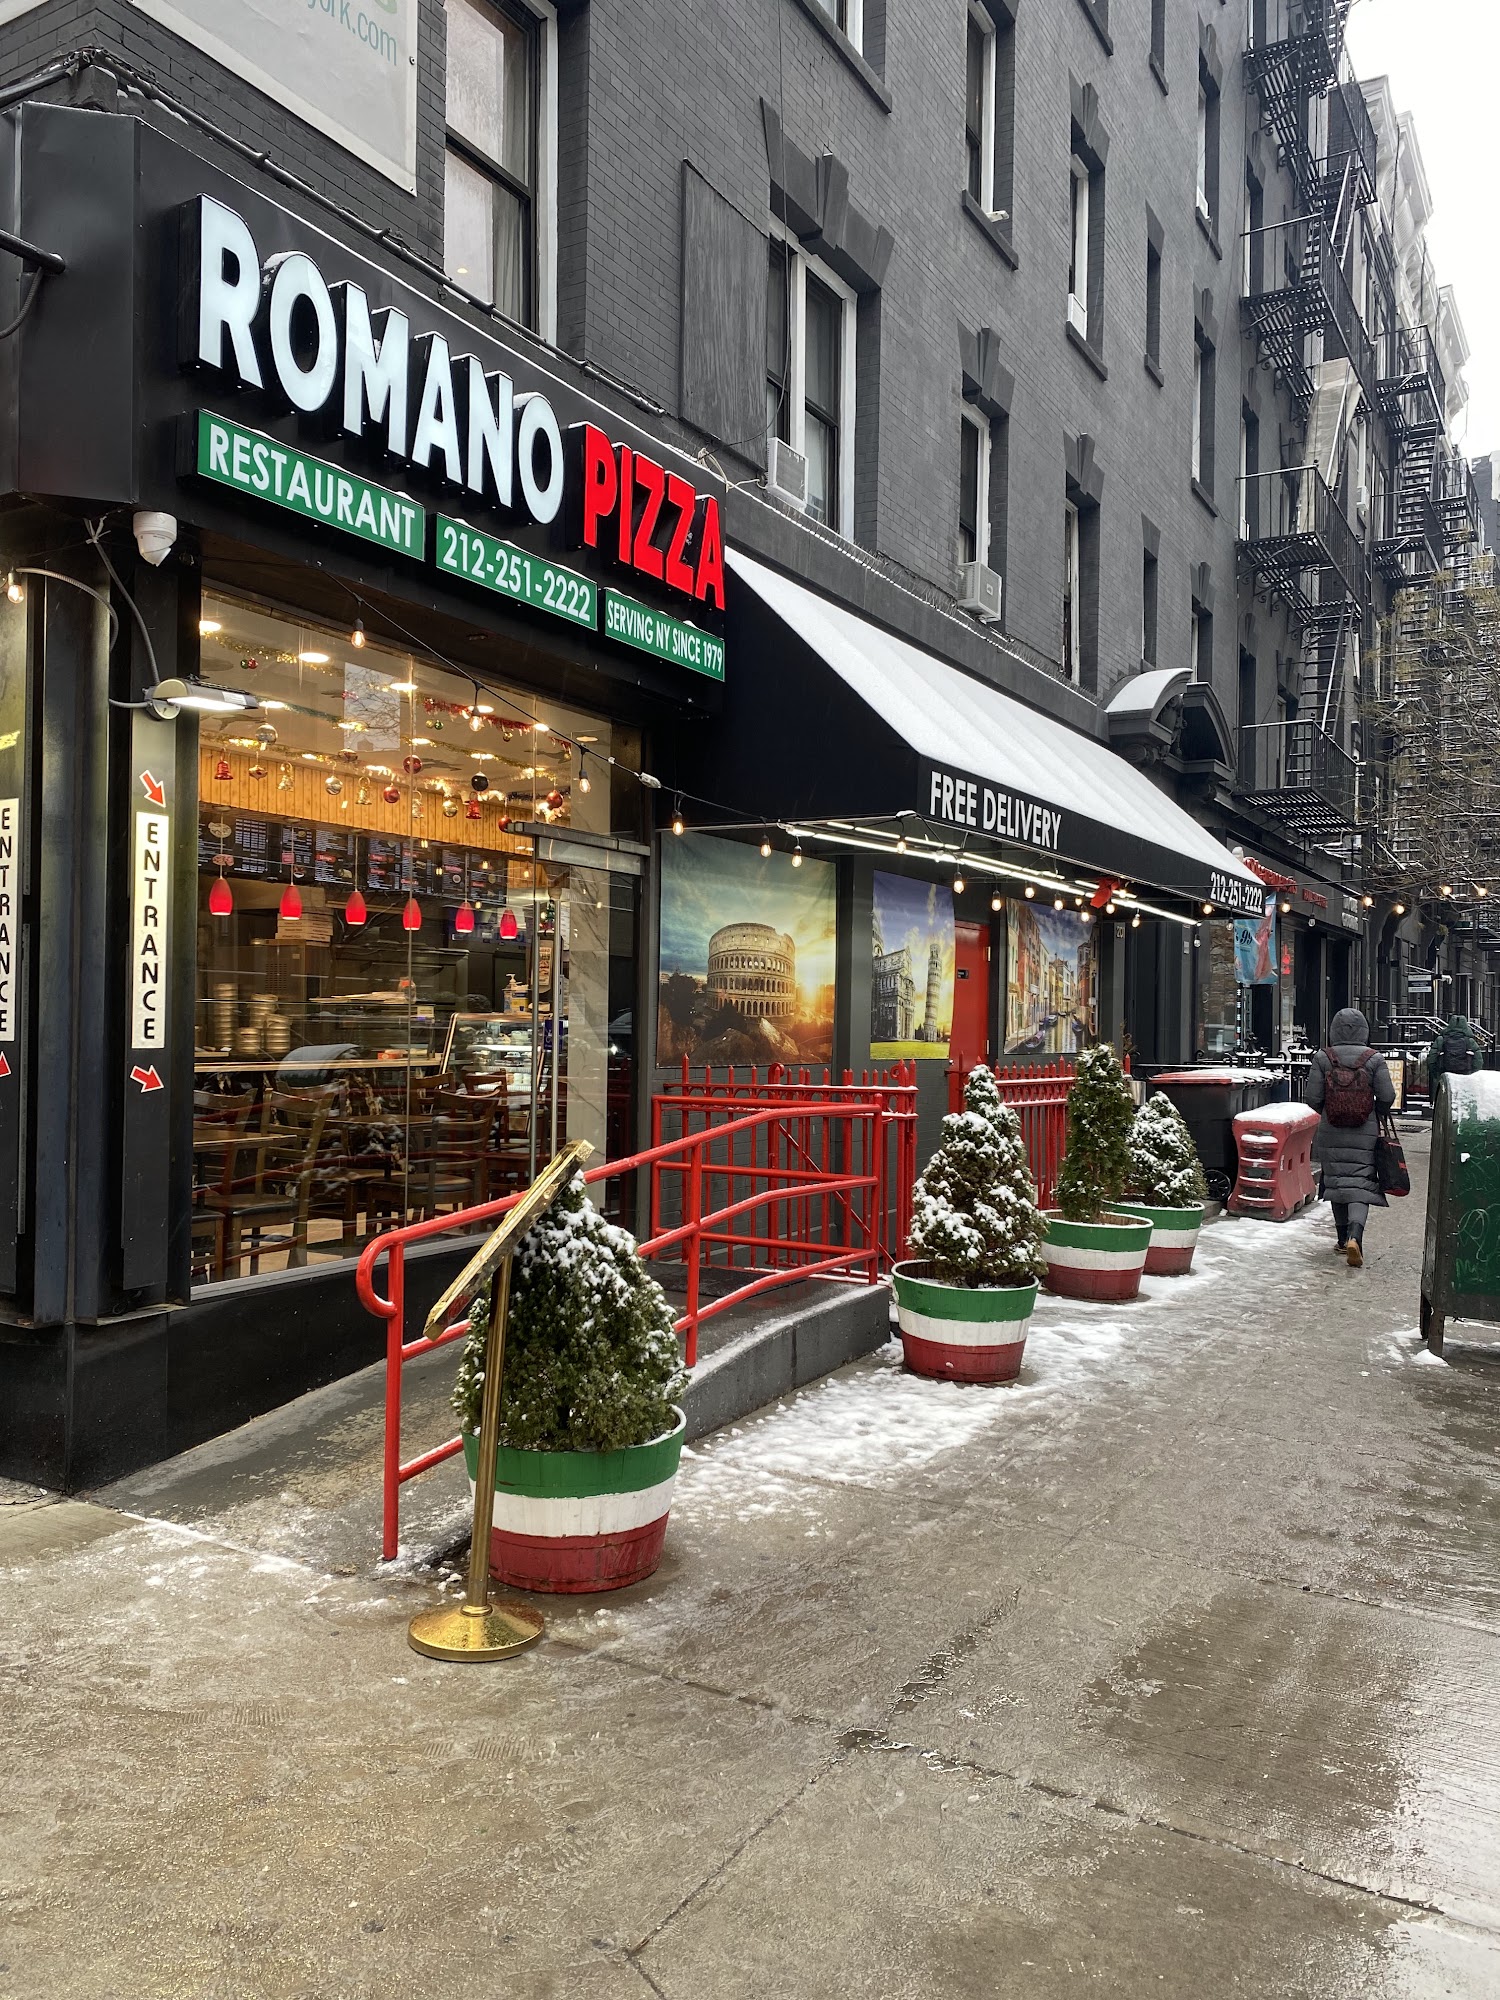 Romano Pizza Restaurant